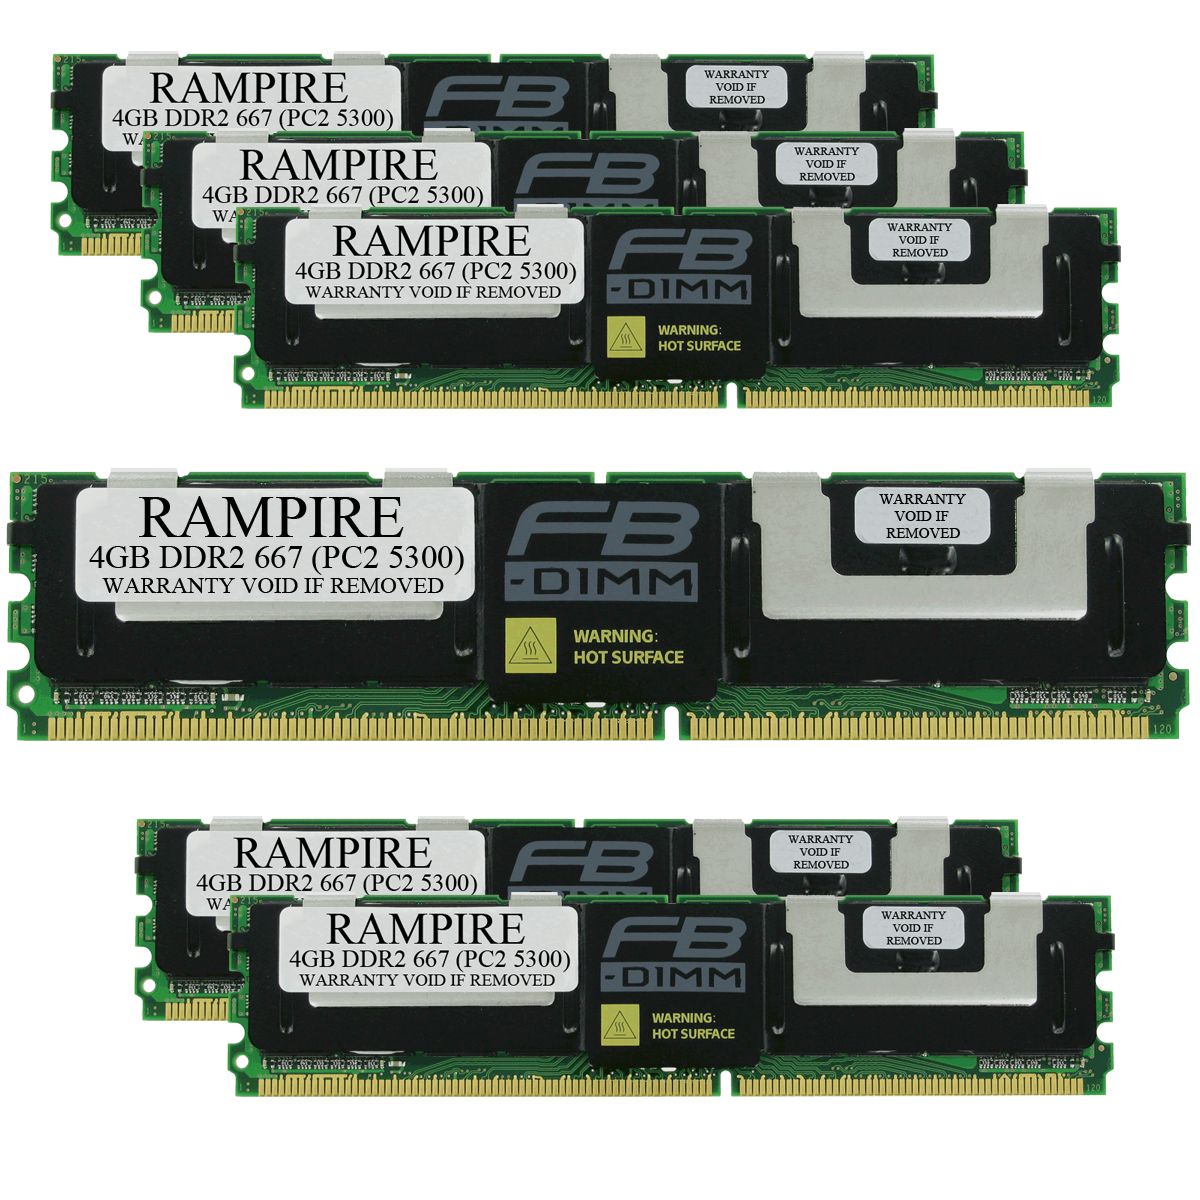 RAMPIRE 24GB (6 x 4GB) DDR2 667 (PC2 5300) 240-Pin SDRAM 2Rx4 Standard Profile 1.8V ECC Fully Buffered Server Memory